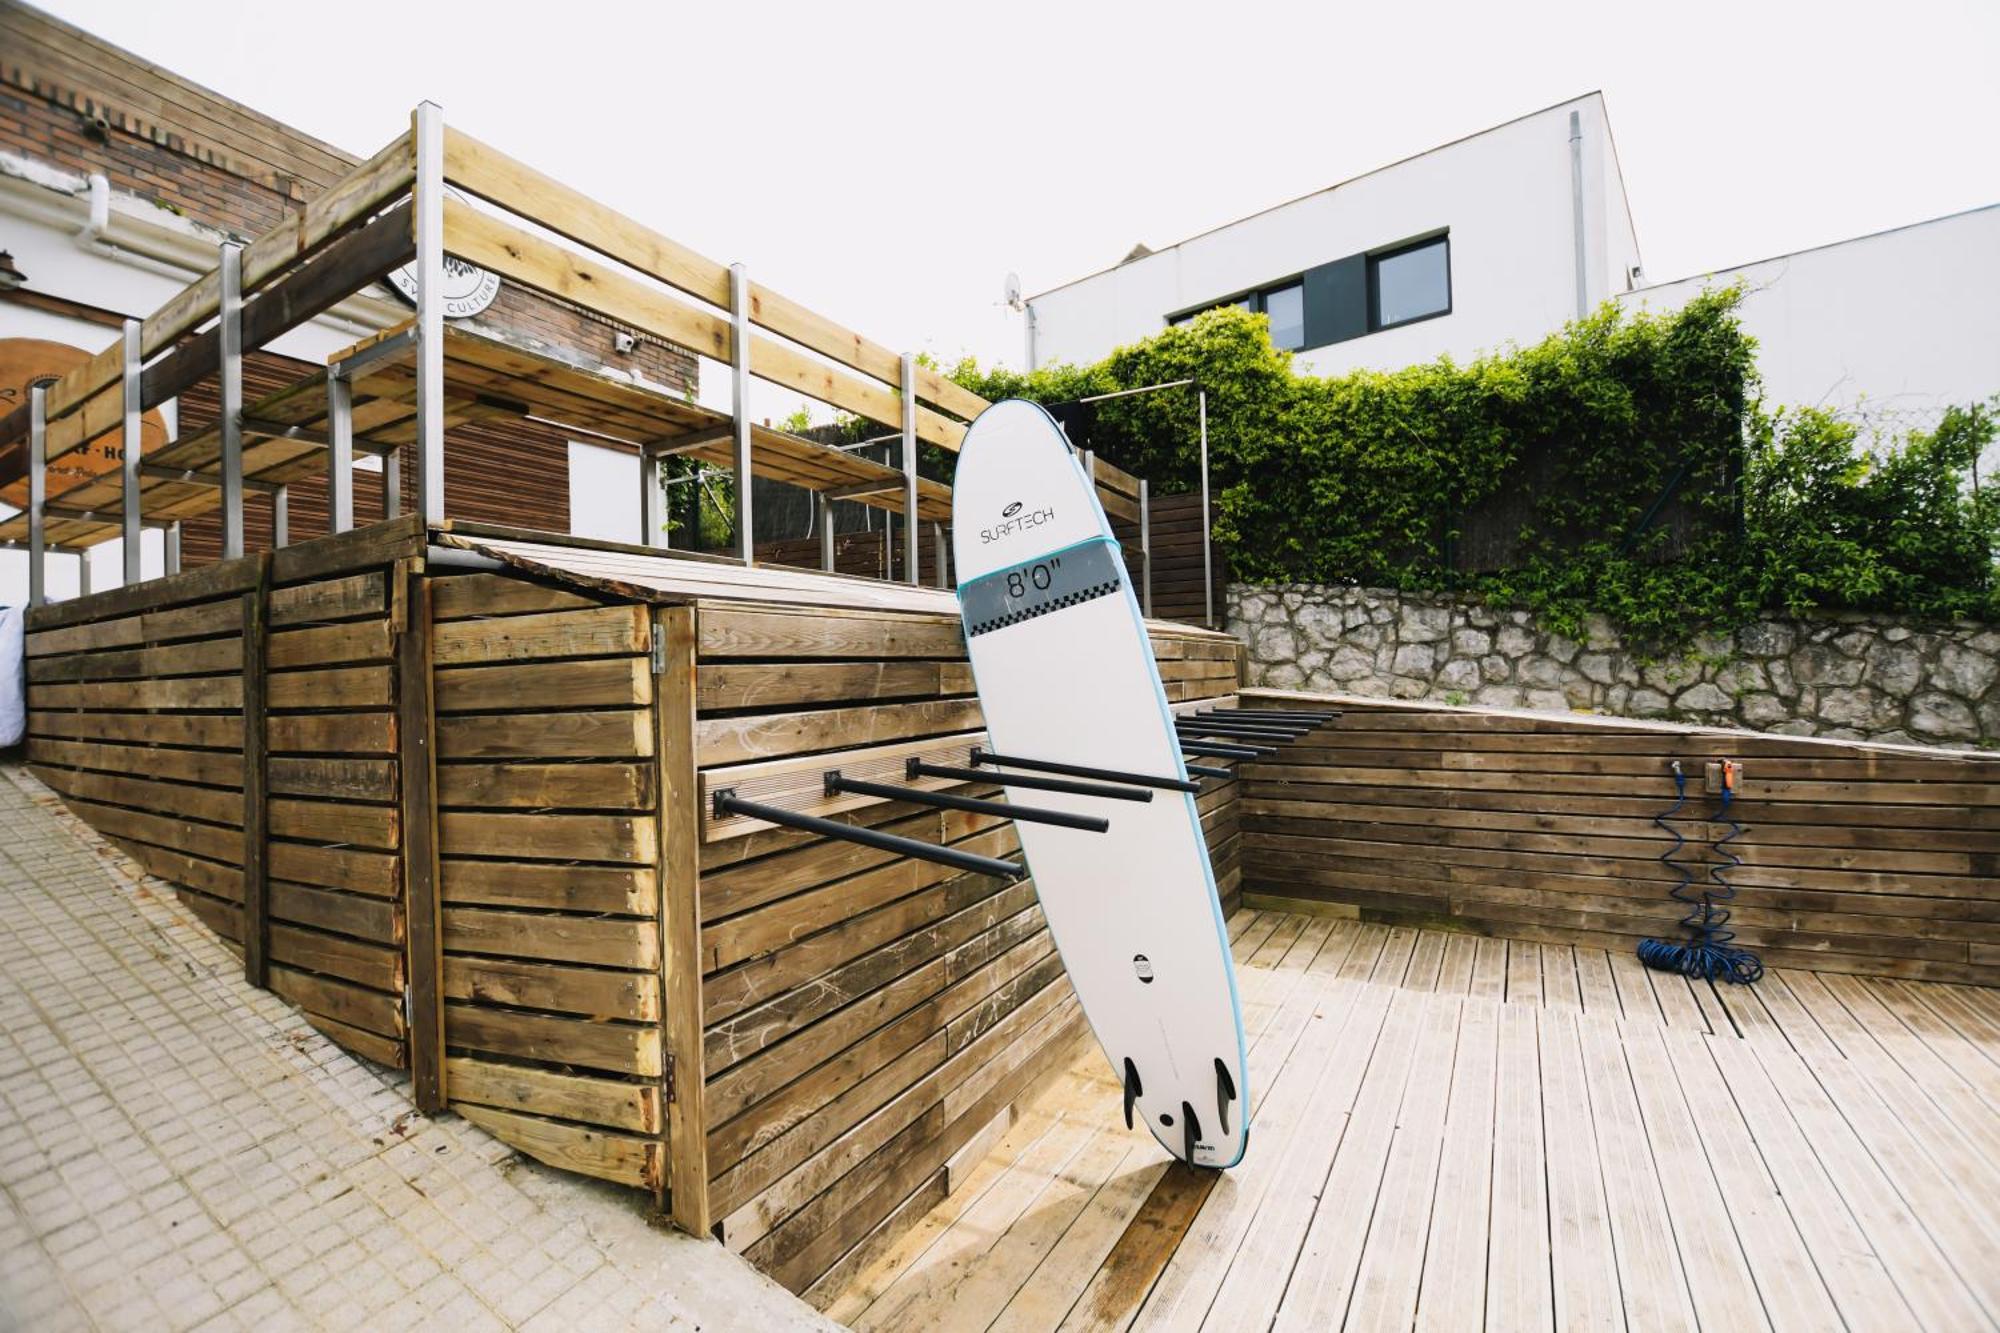 Loredo Surf House Exterior photo